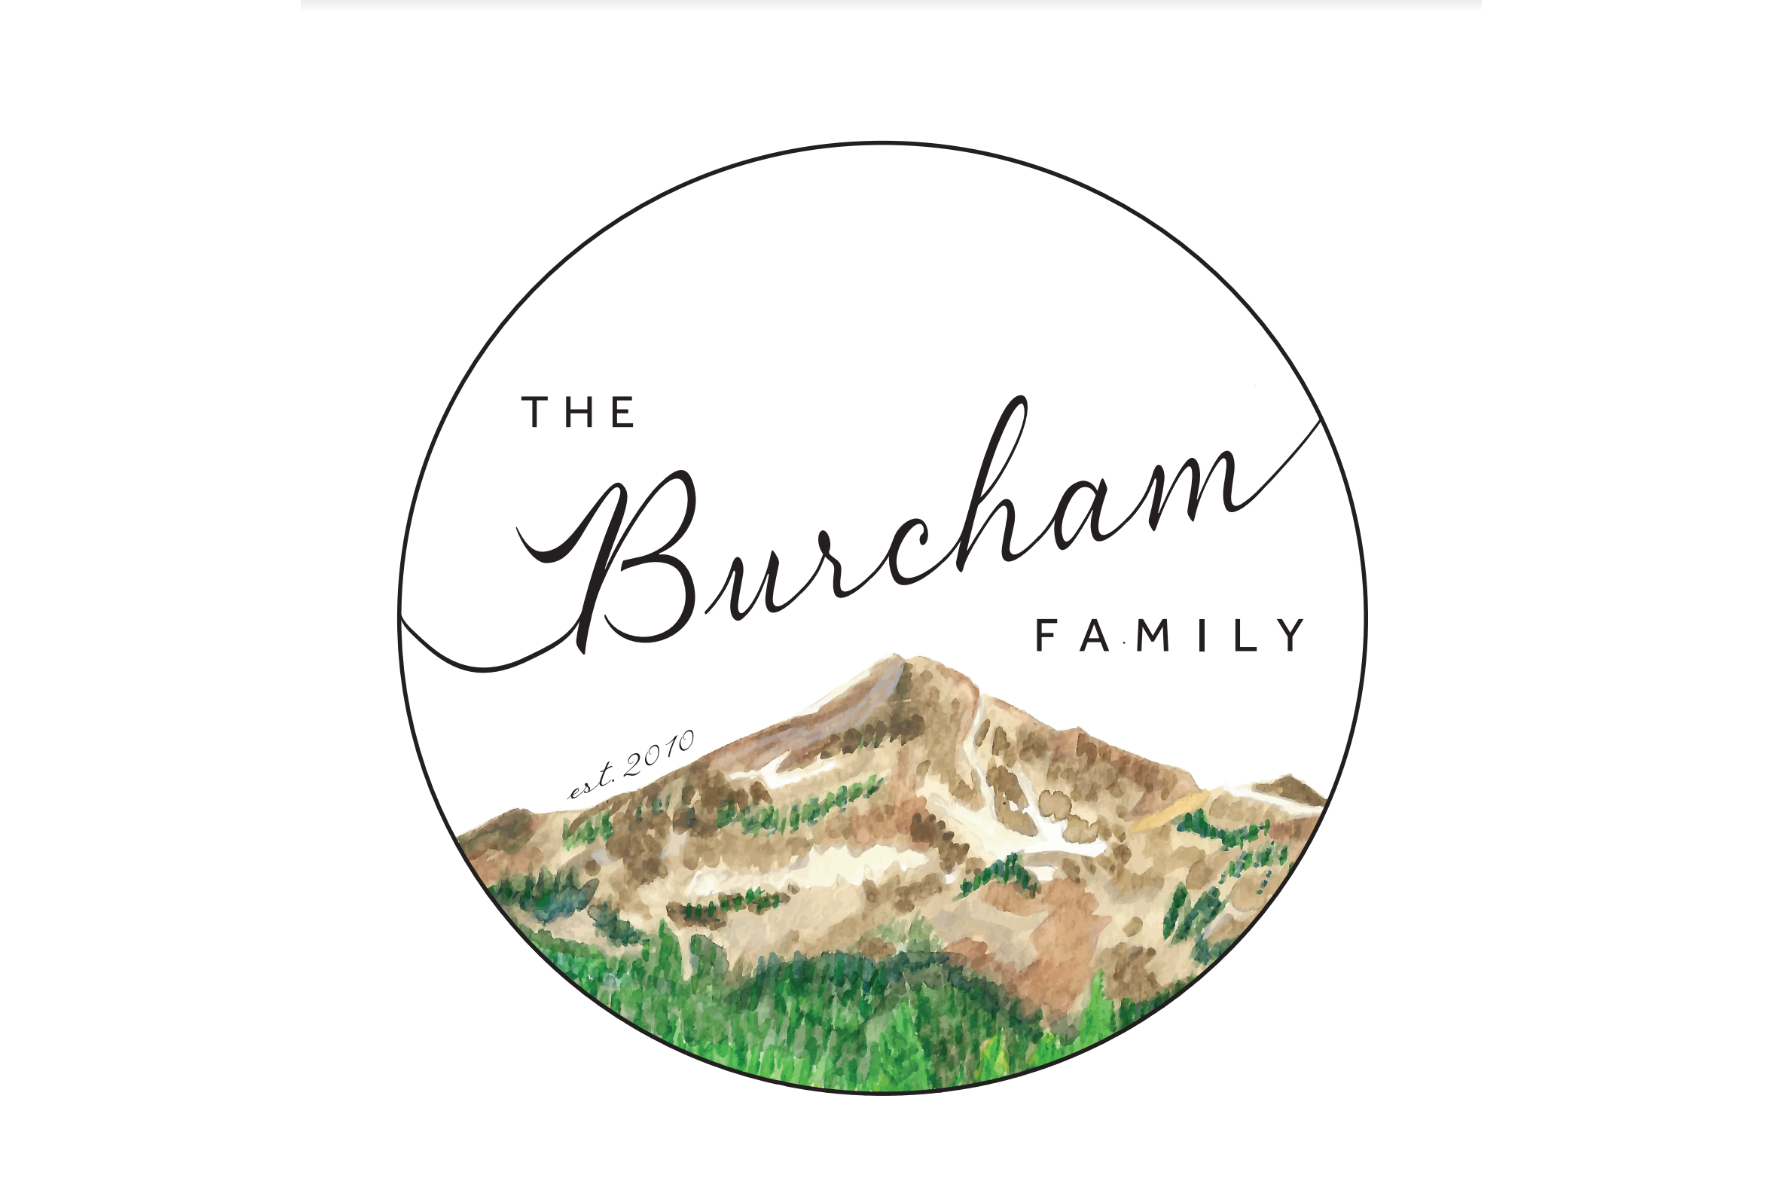 Burcham family logo